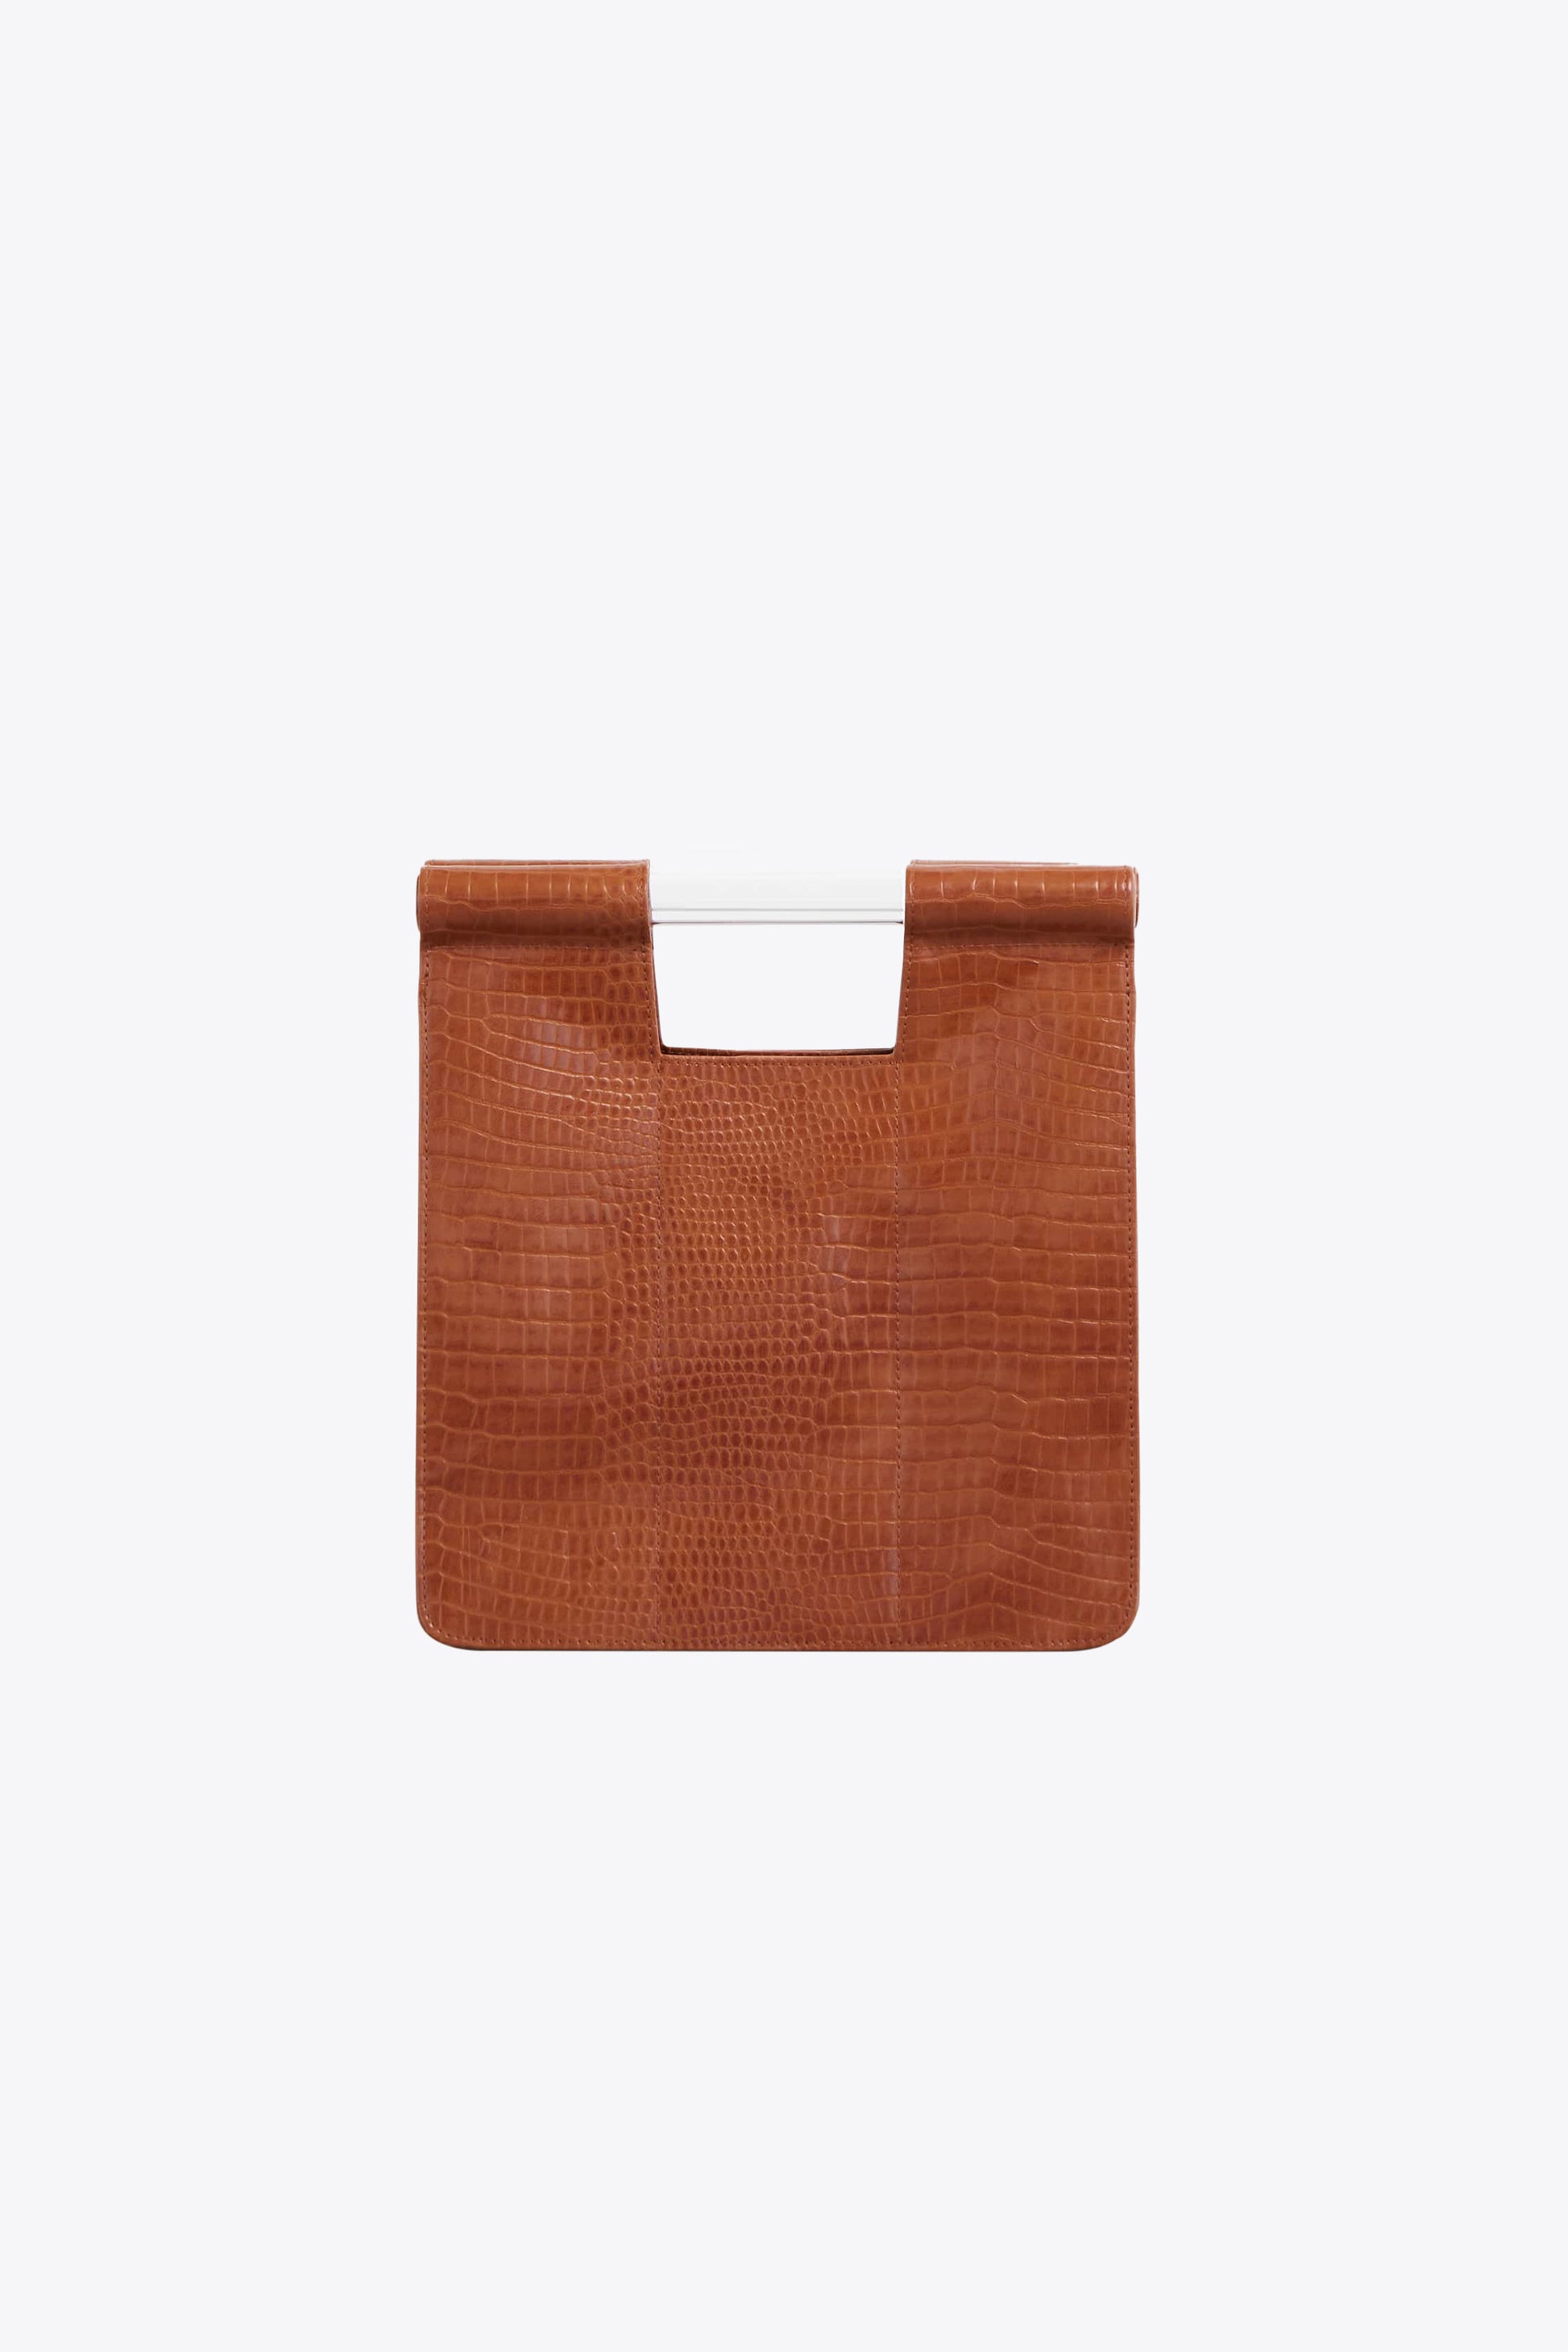 Ladies Purse Bag. Orange Clutch Bag. Small Handbag for Women. Orange Crossbody Bag. Orange Clutch Bag. Faux Leather Handbag. Vegan Handbag